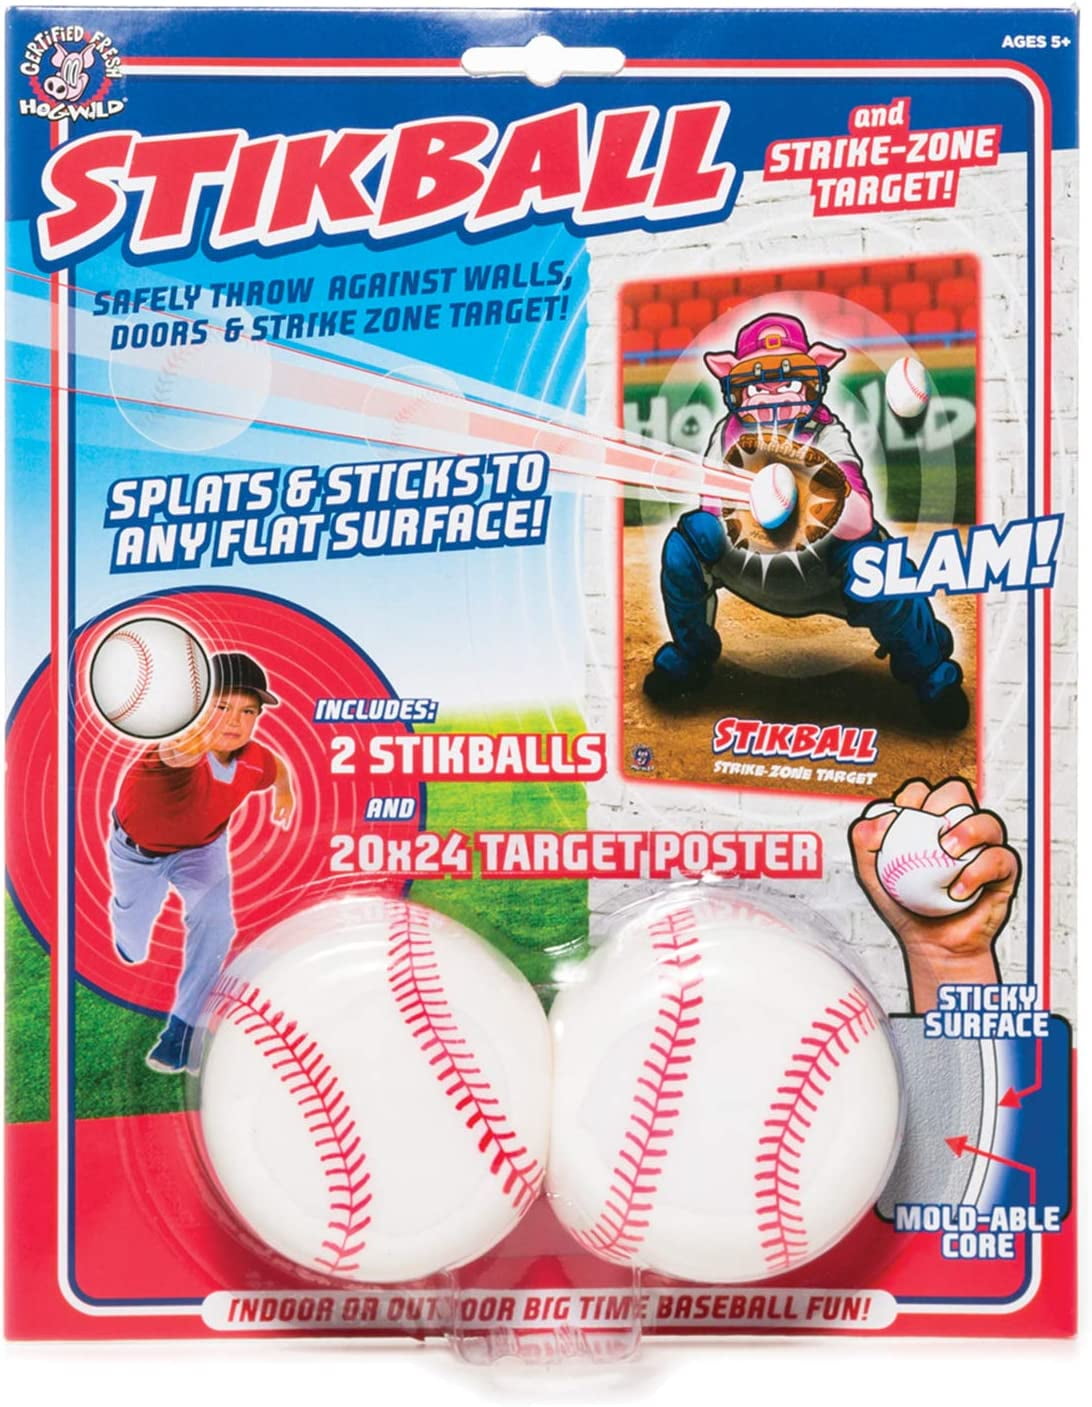 Hog Wild Stikball and Strike-Zone Target - Squishy Stikball Baseball and Sticks to Strike-Zone Target - Ages 4+ - Walmart.com